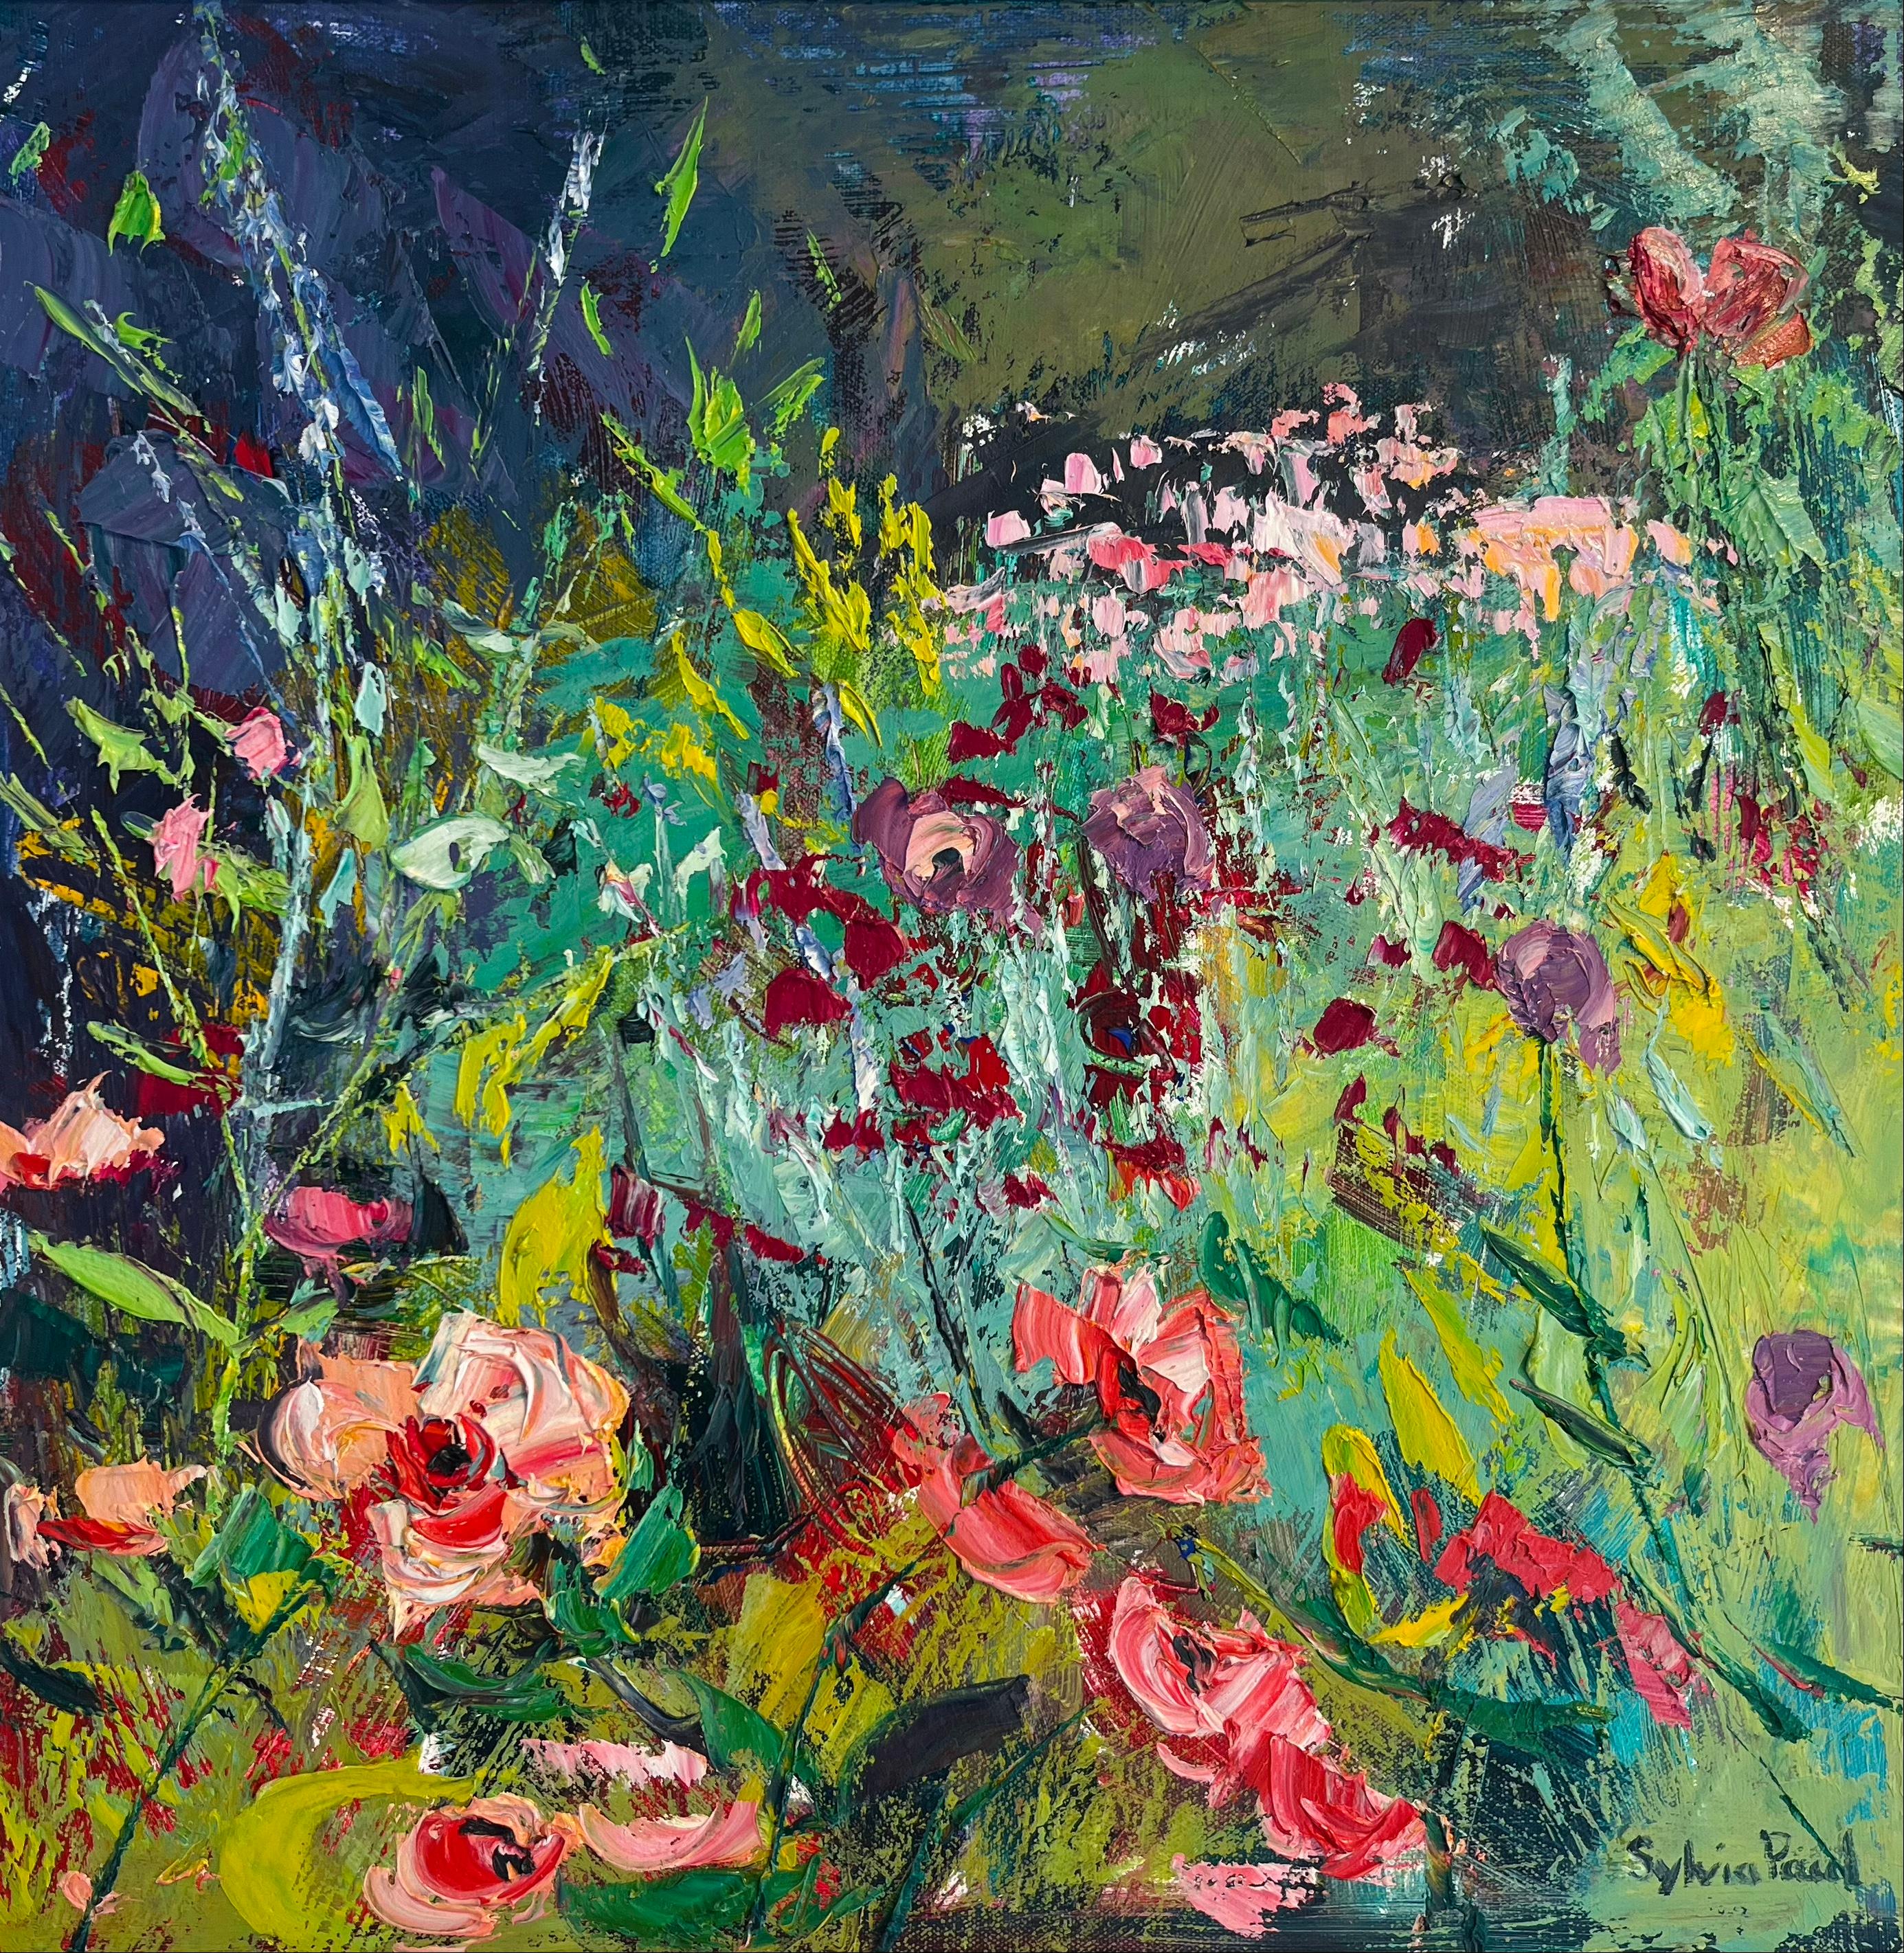 Sylvia Paul Still-Life Painting – Rosa Mohnblumen im Garten - original abstraktes stillleben-zeitgenössisches gemälde